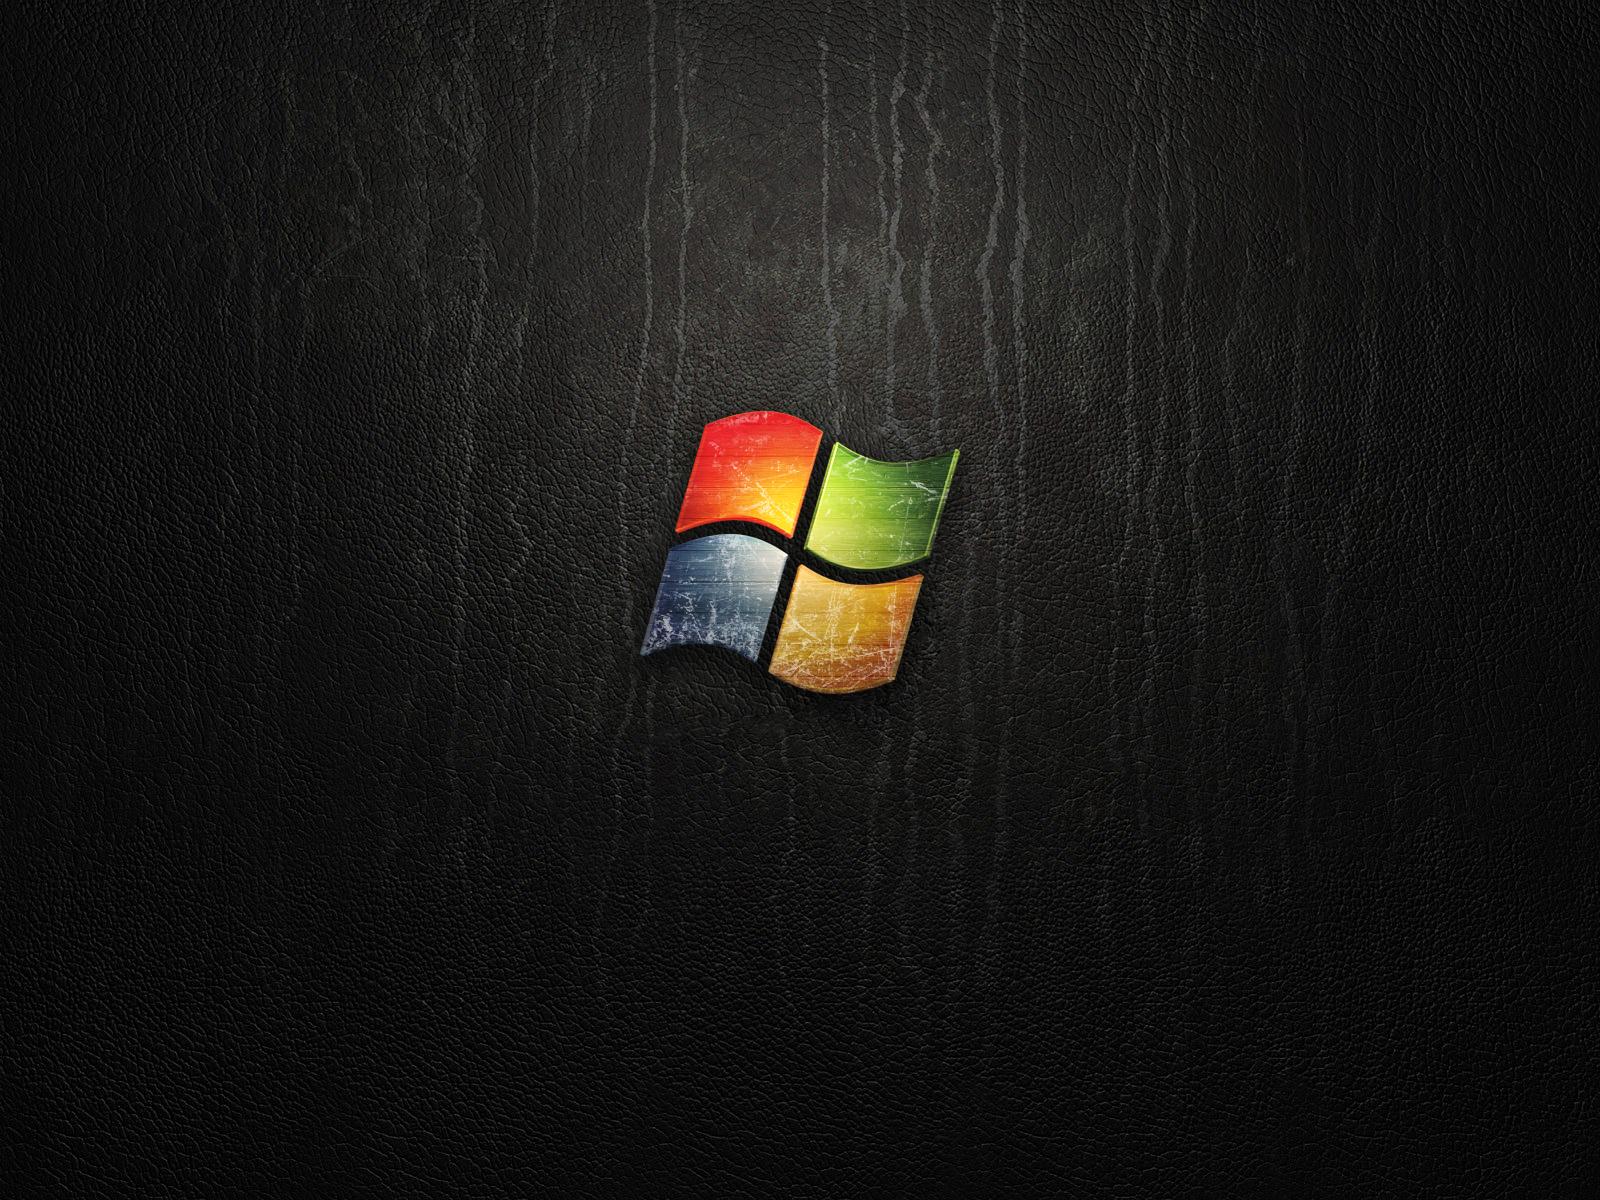 Download 1600x1200 Weathered Windows Wallpaper desktop PC and Mac